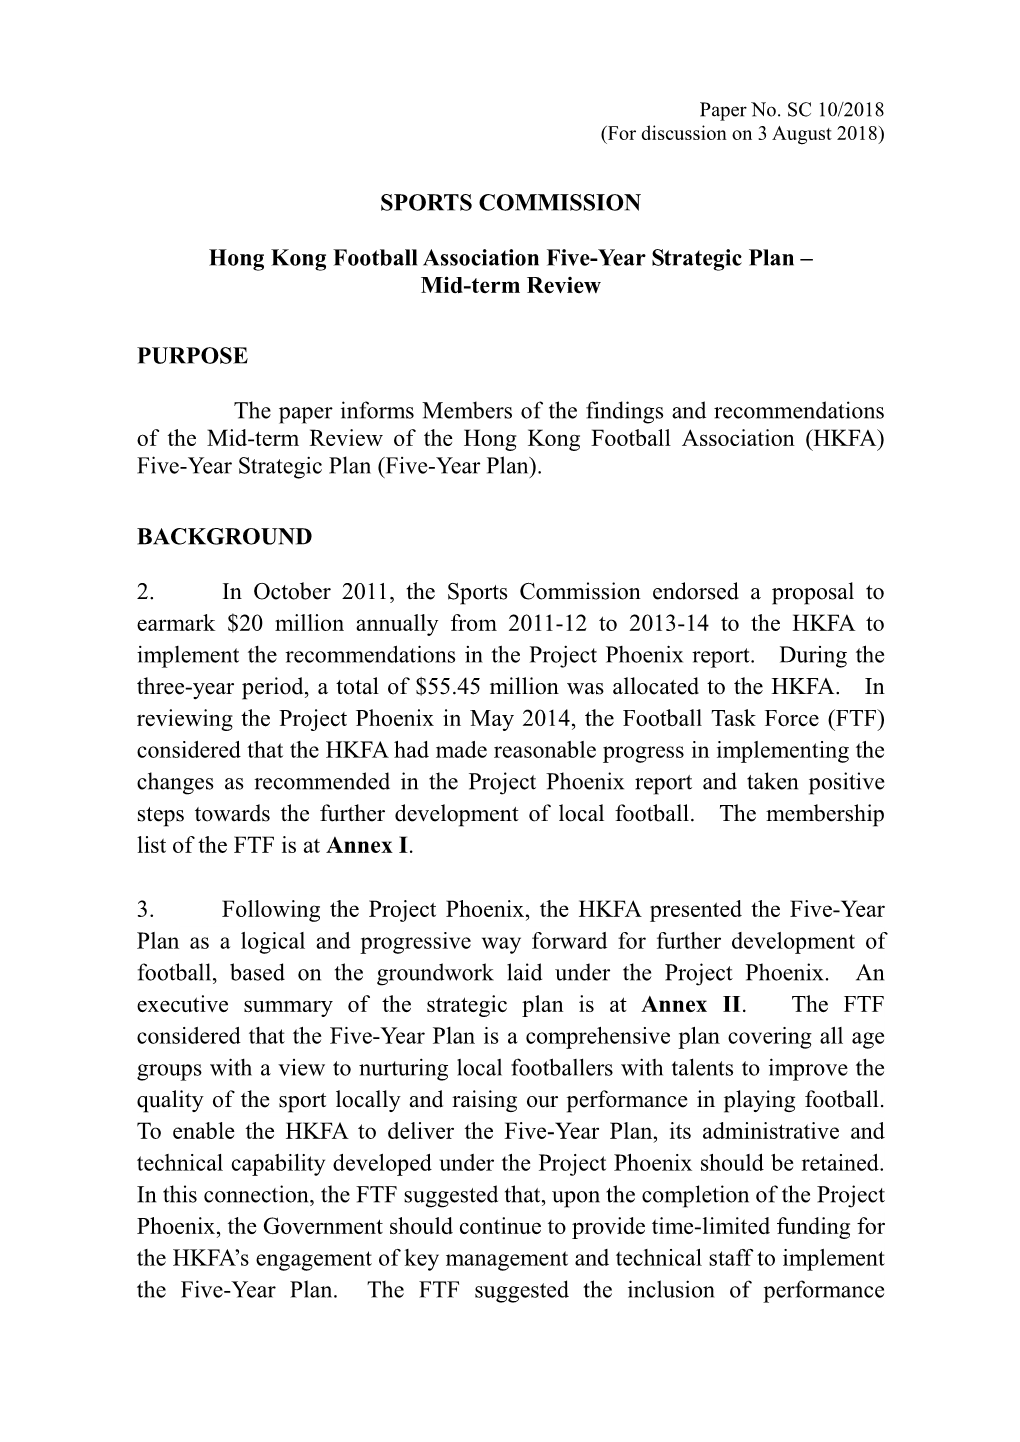 Paper SC 10/2018: Hong Kong Football